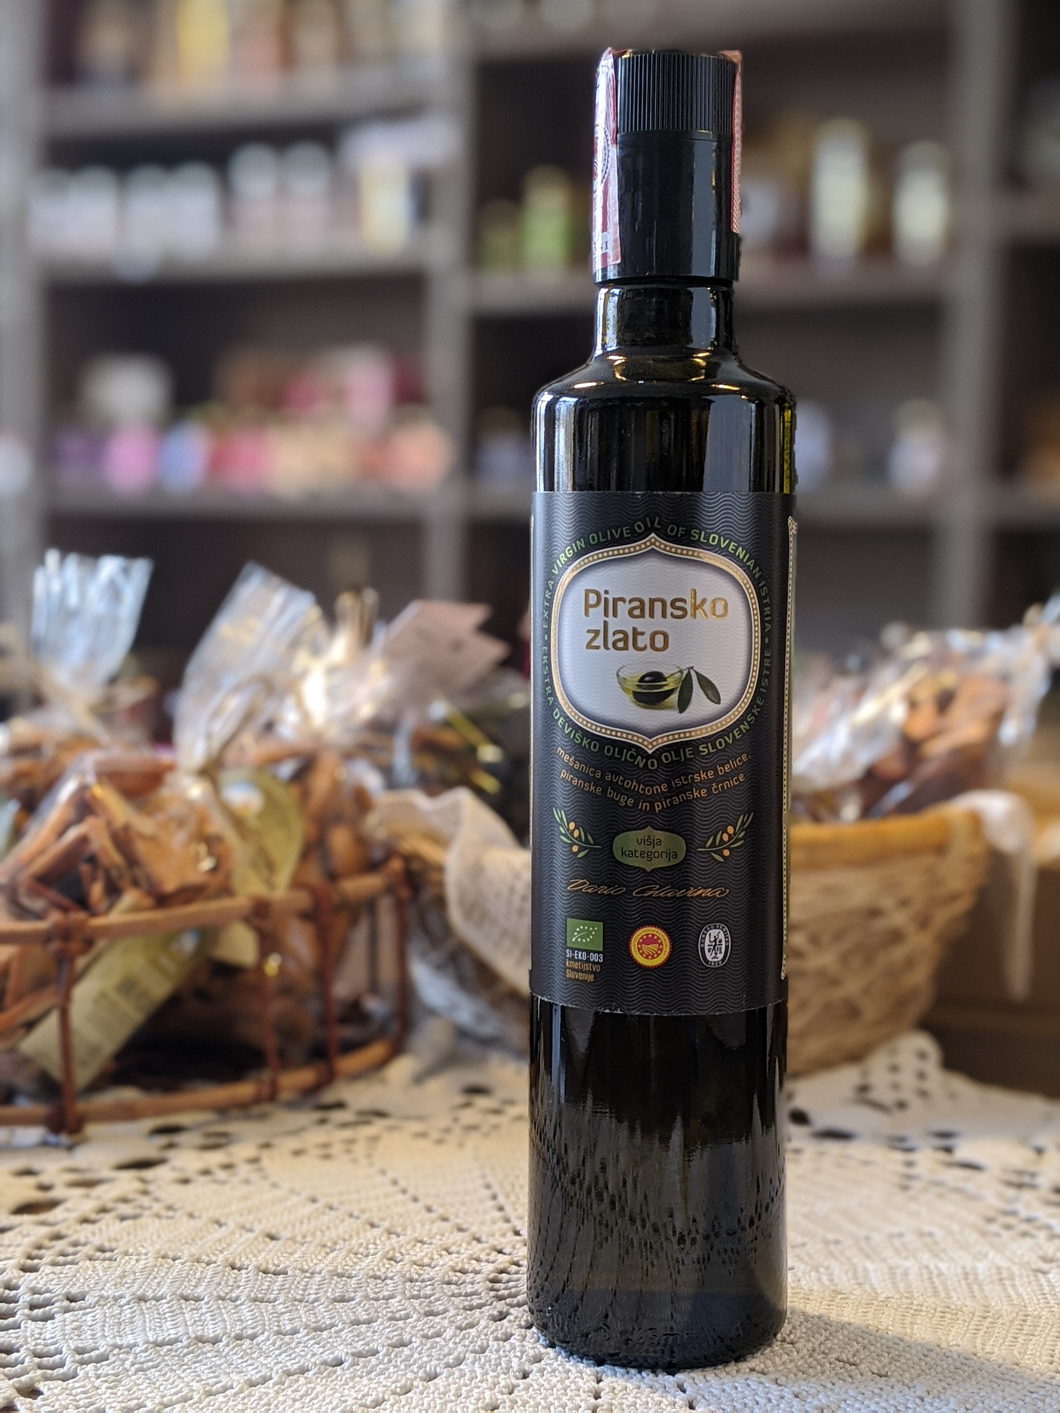 Extra virgin olive oil Slovenske Istria 500ml, 100ml - protected designation of origin